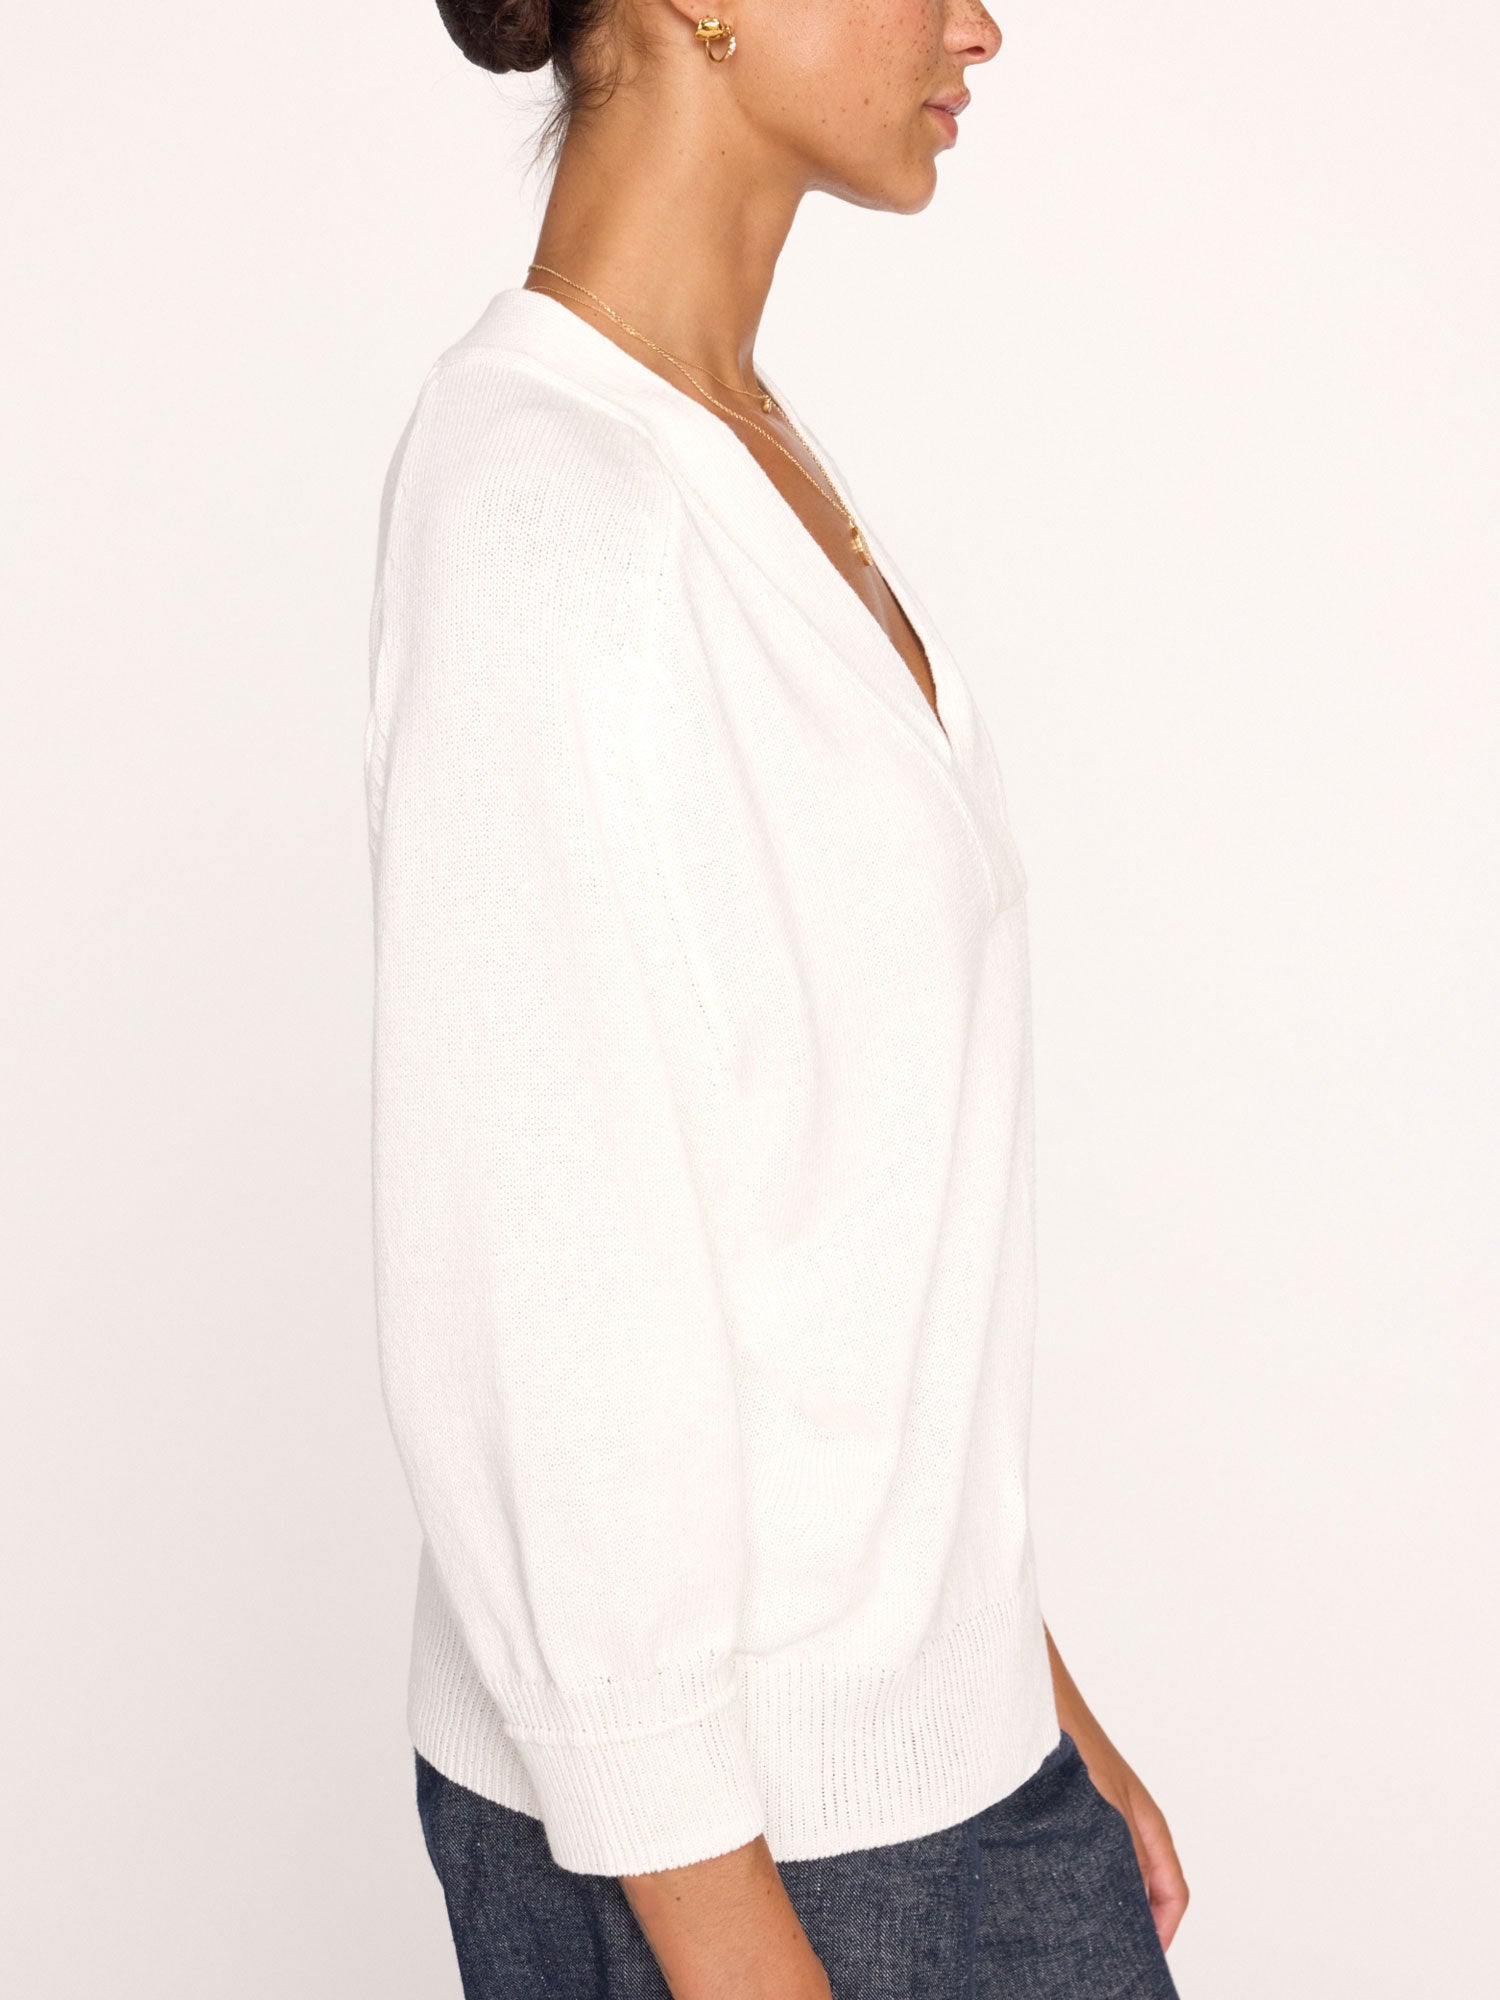 Imogen V-neck cotton white sweater side view